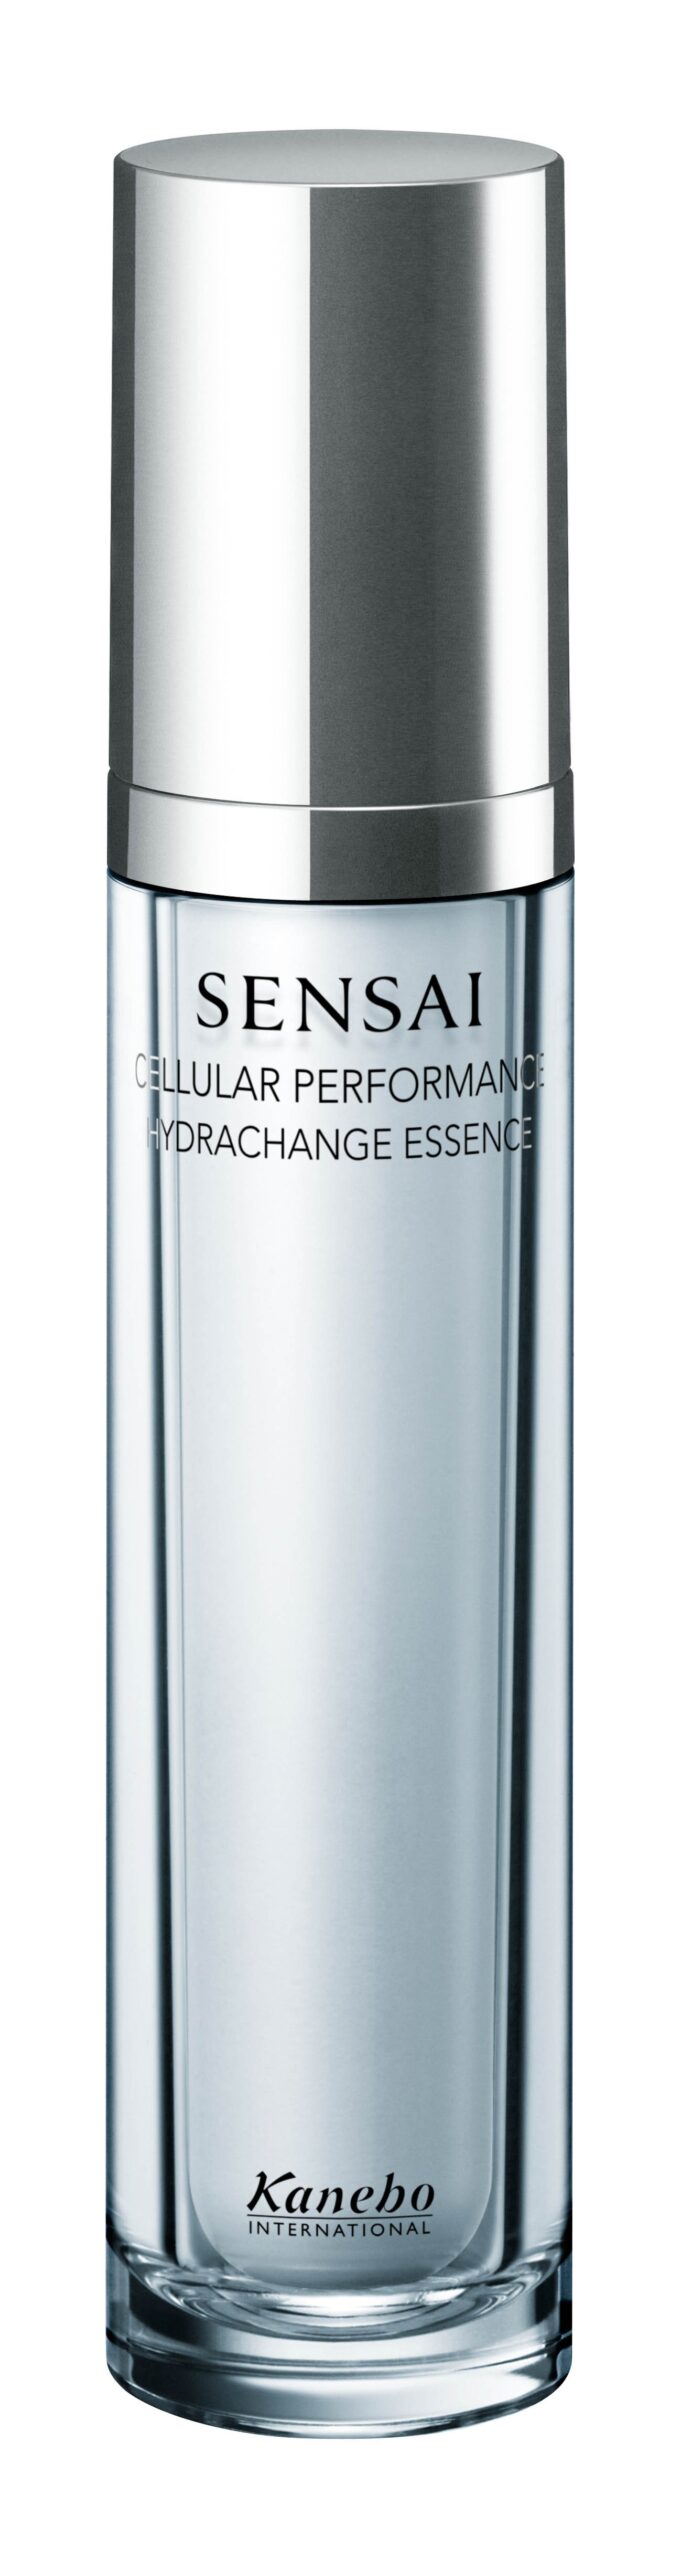 Sensai Cellular Perf. Hydrachange Essence 40 ml